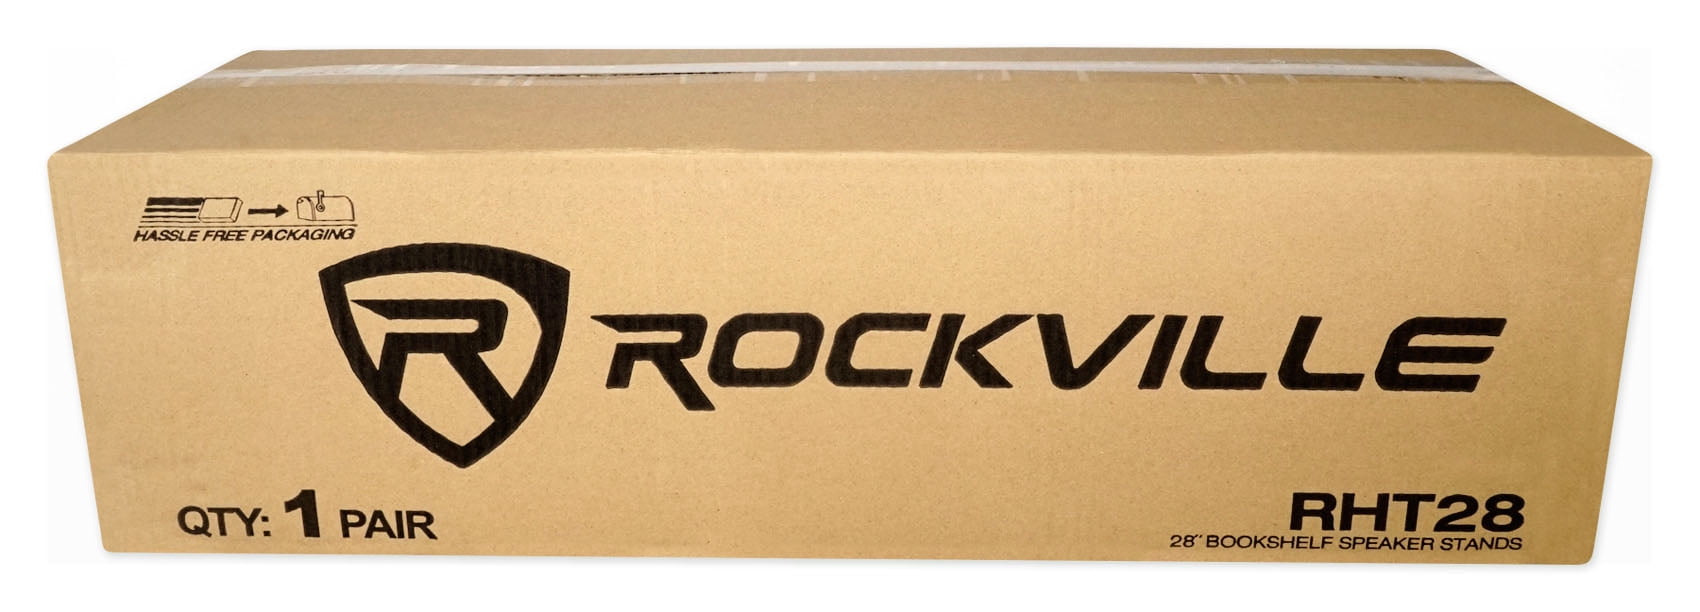 Rockville 28 2-Tone Studio Monitor Speaker Stands For M-Audio BX8 D3 2 